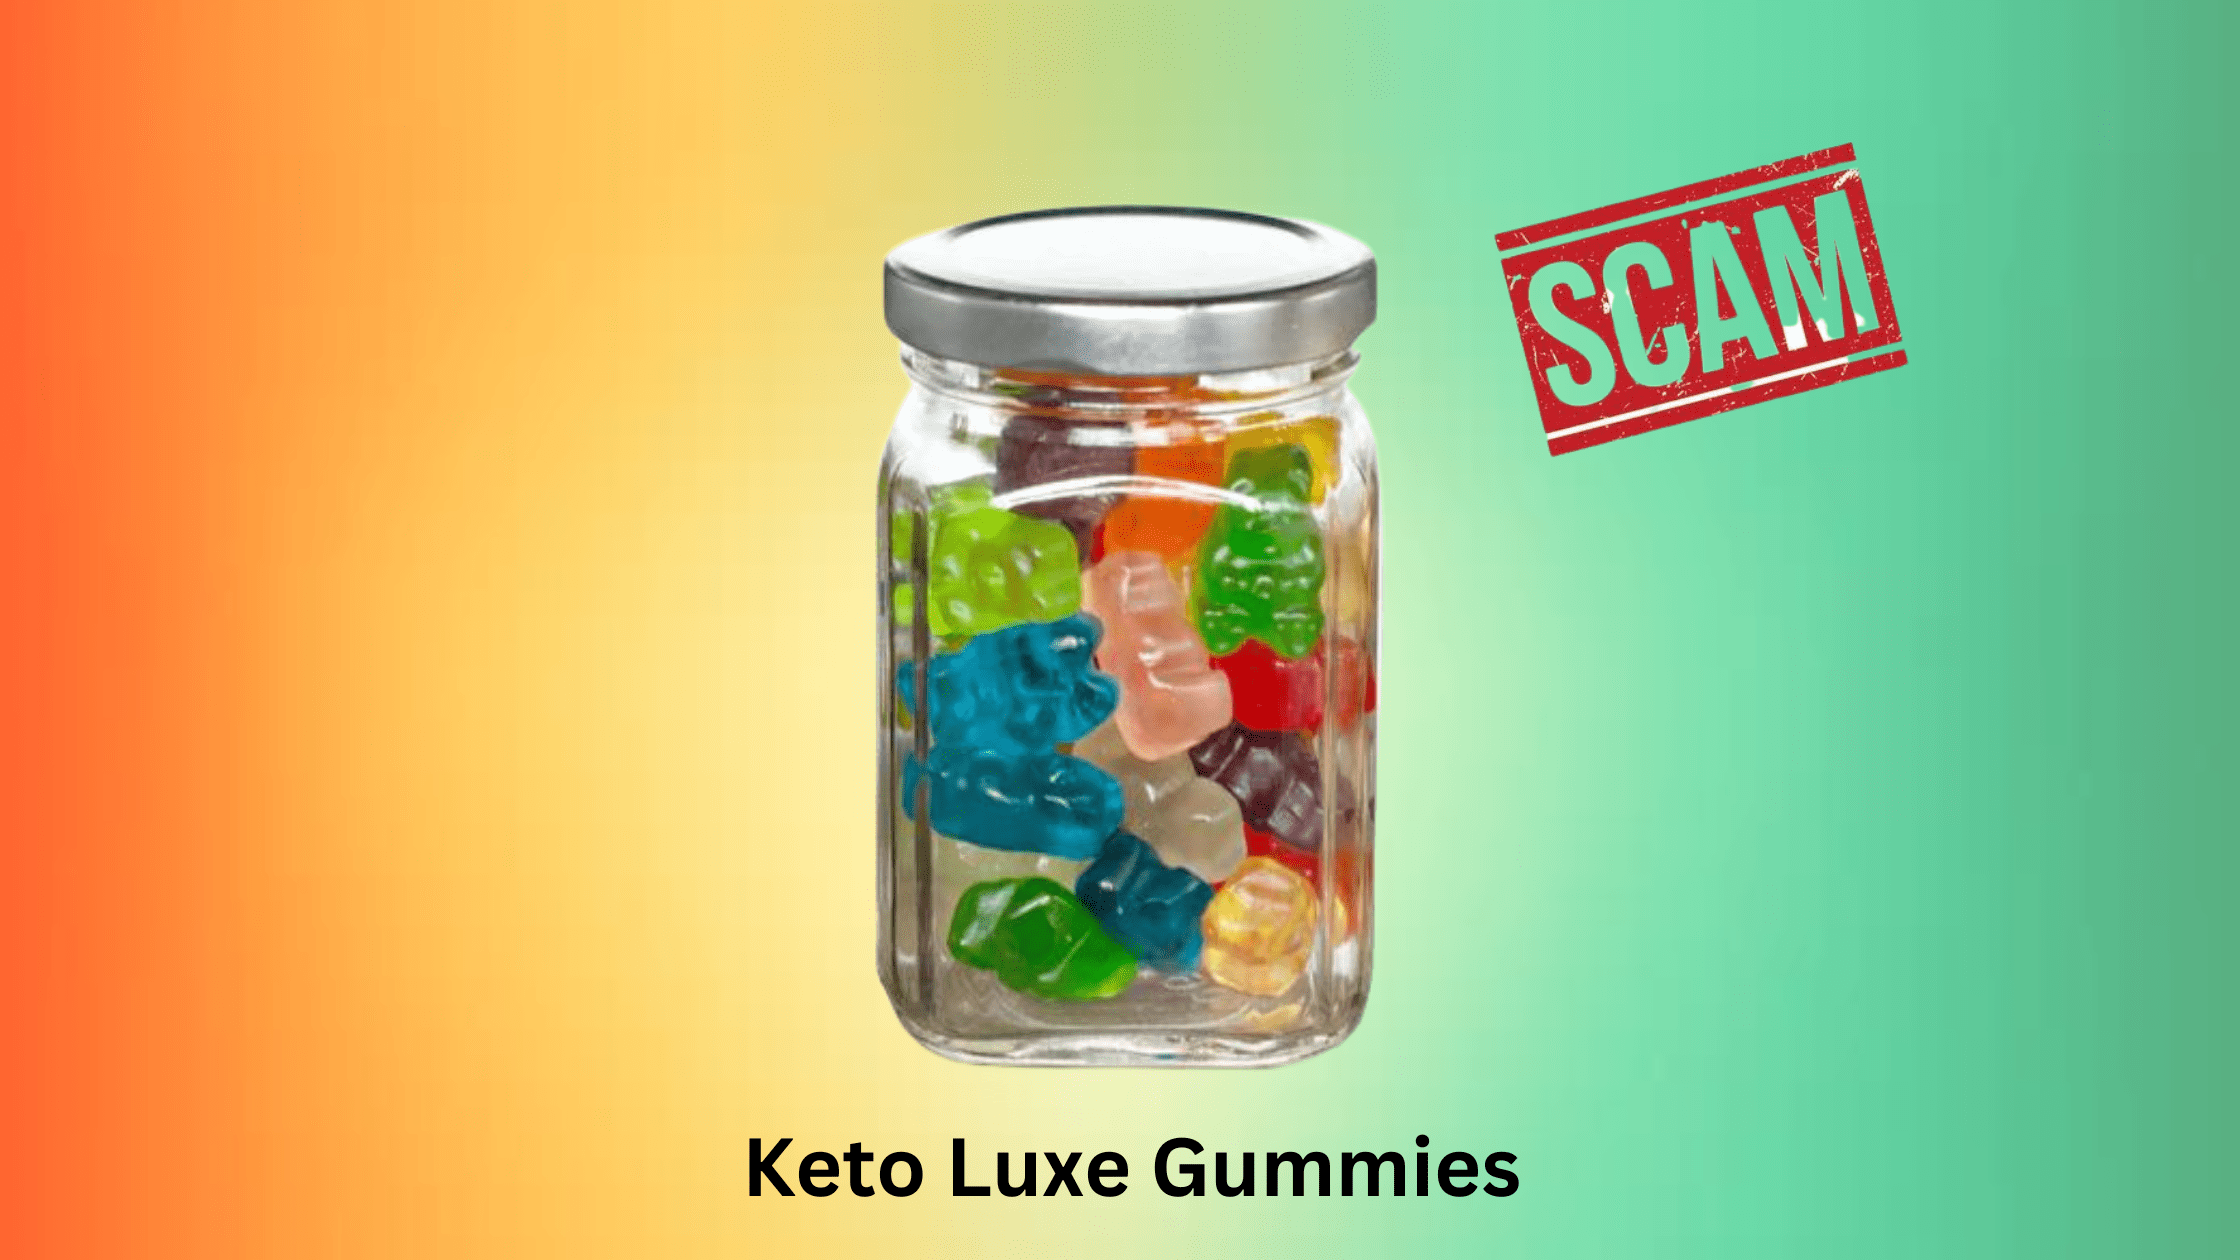 Keto Luxe Gummies Scam